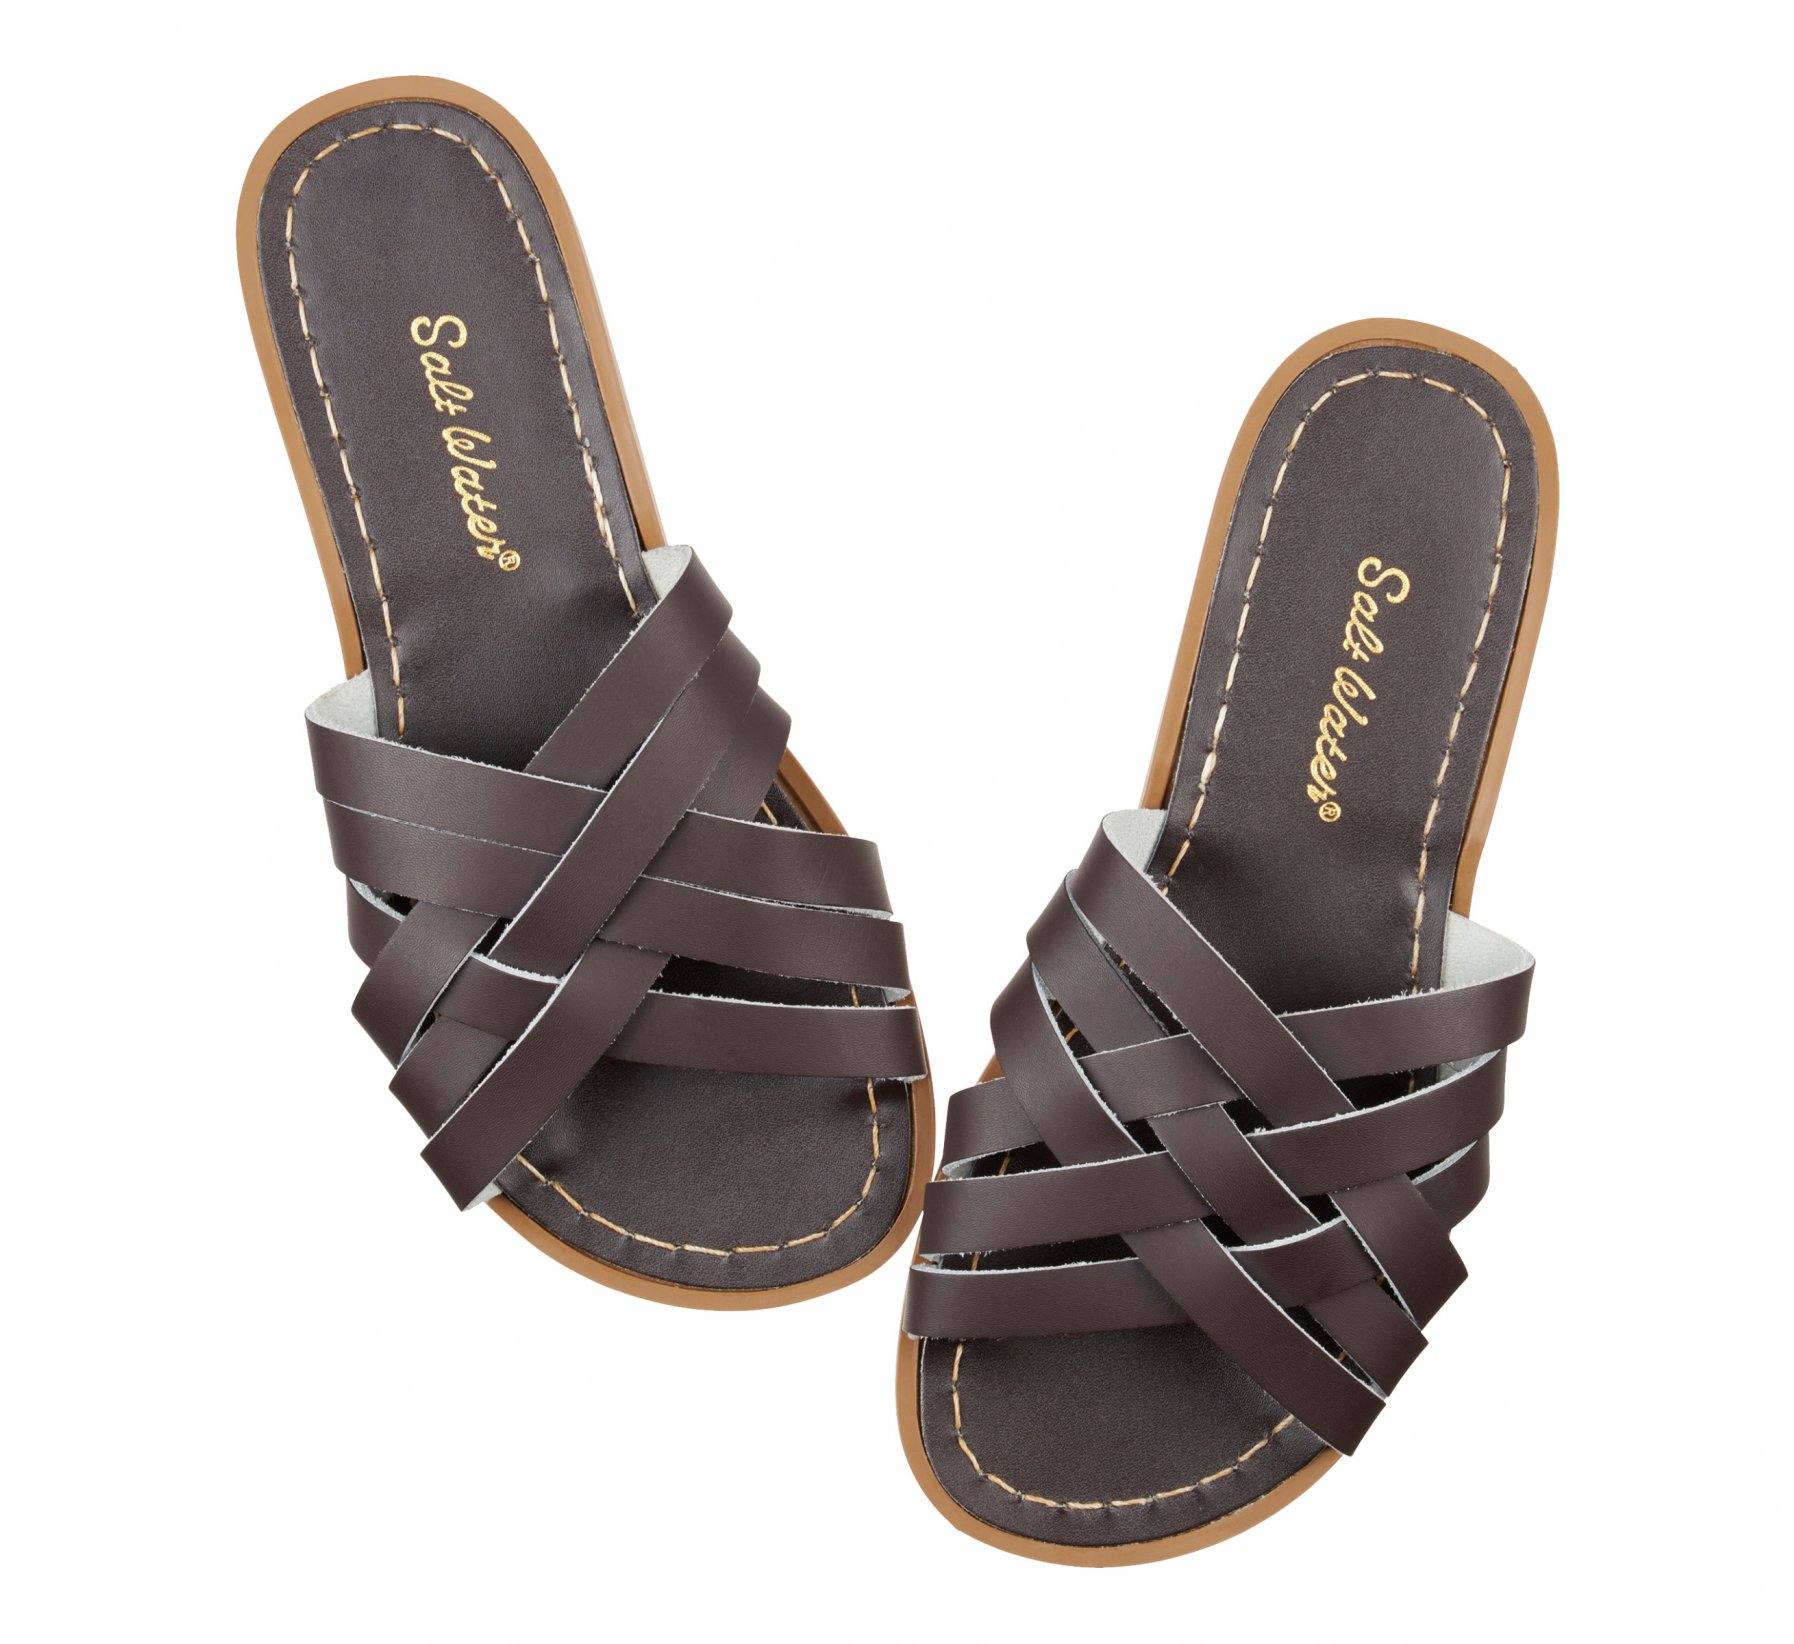 Retro Slide Brown Sandal - Salt Water Sandals